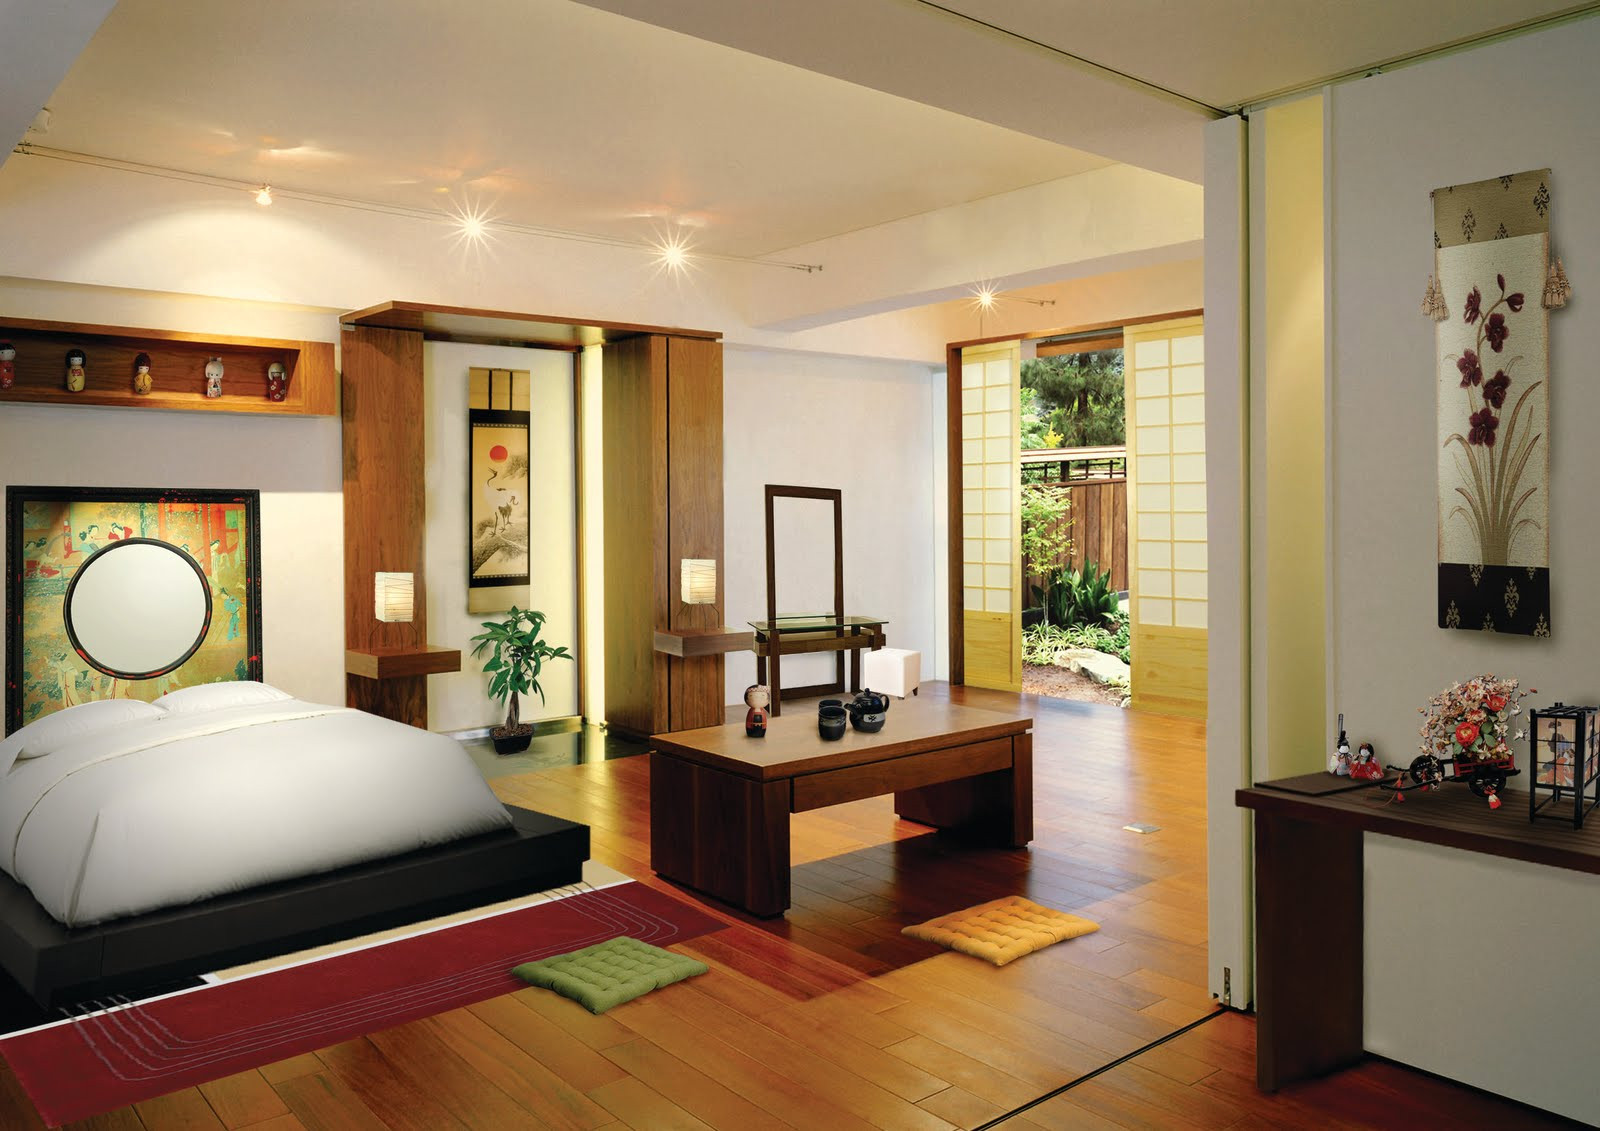 Japanese Bedroom Decor
 Melokumi Japanese Style Bedroom Design